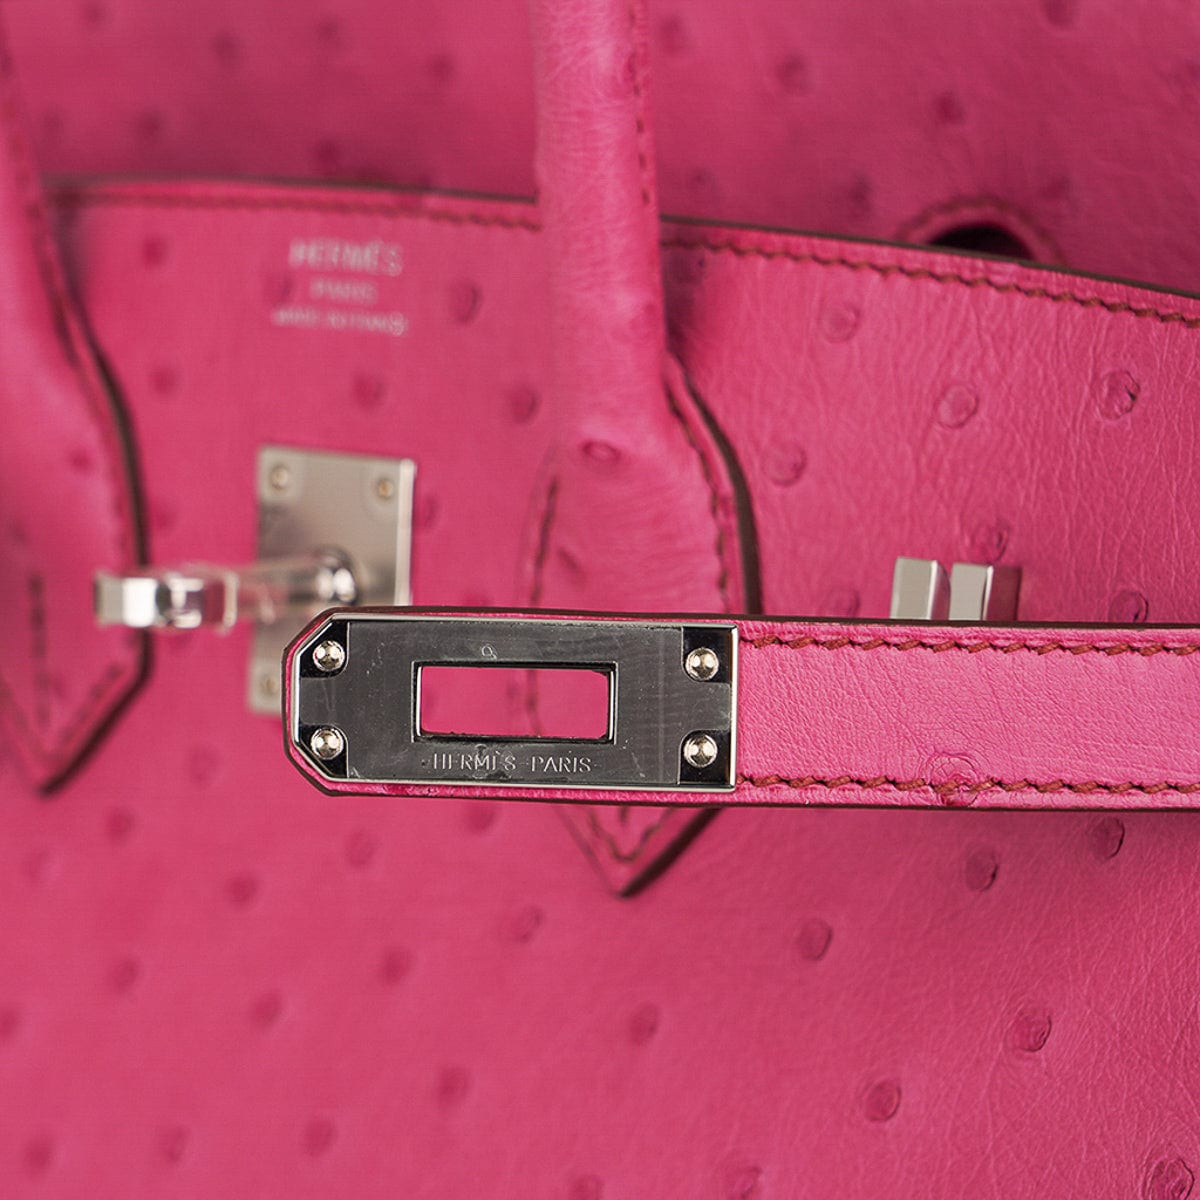 Hermes pink ostrich Birkin bag.  Hermes birkin handbags, Hermes